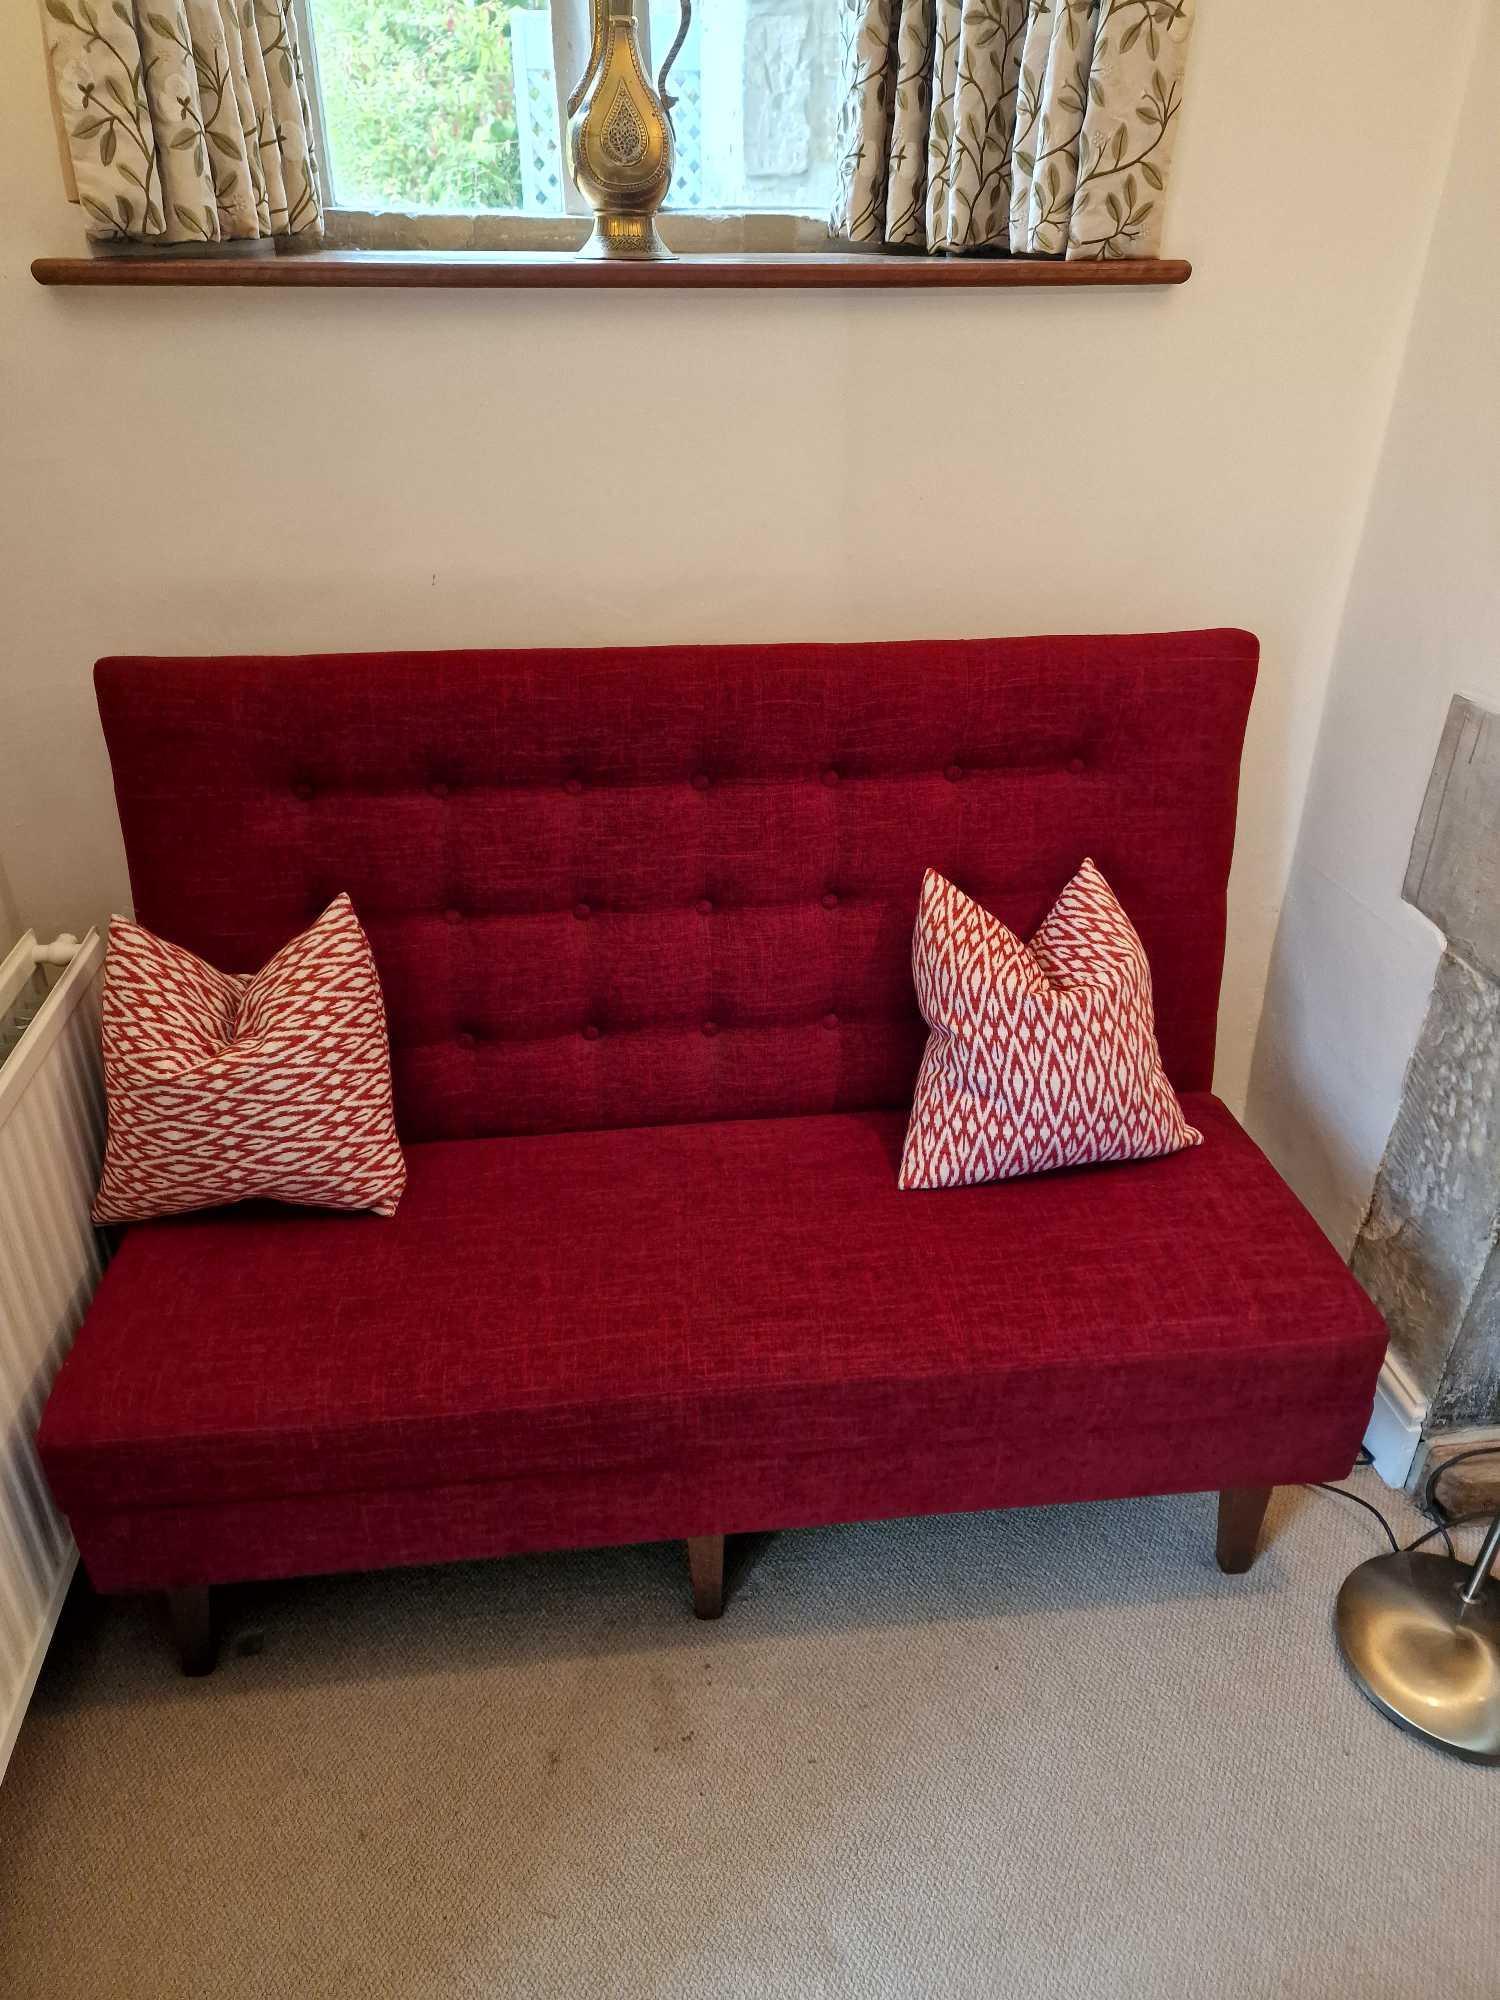 A Bespoke Handmade Bourne Furniture High Back Sofa  Bench Mounted On Six Sturdy Legs The Upholstered